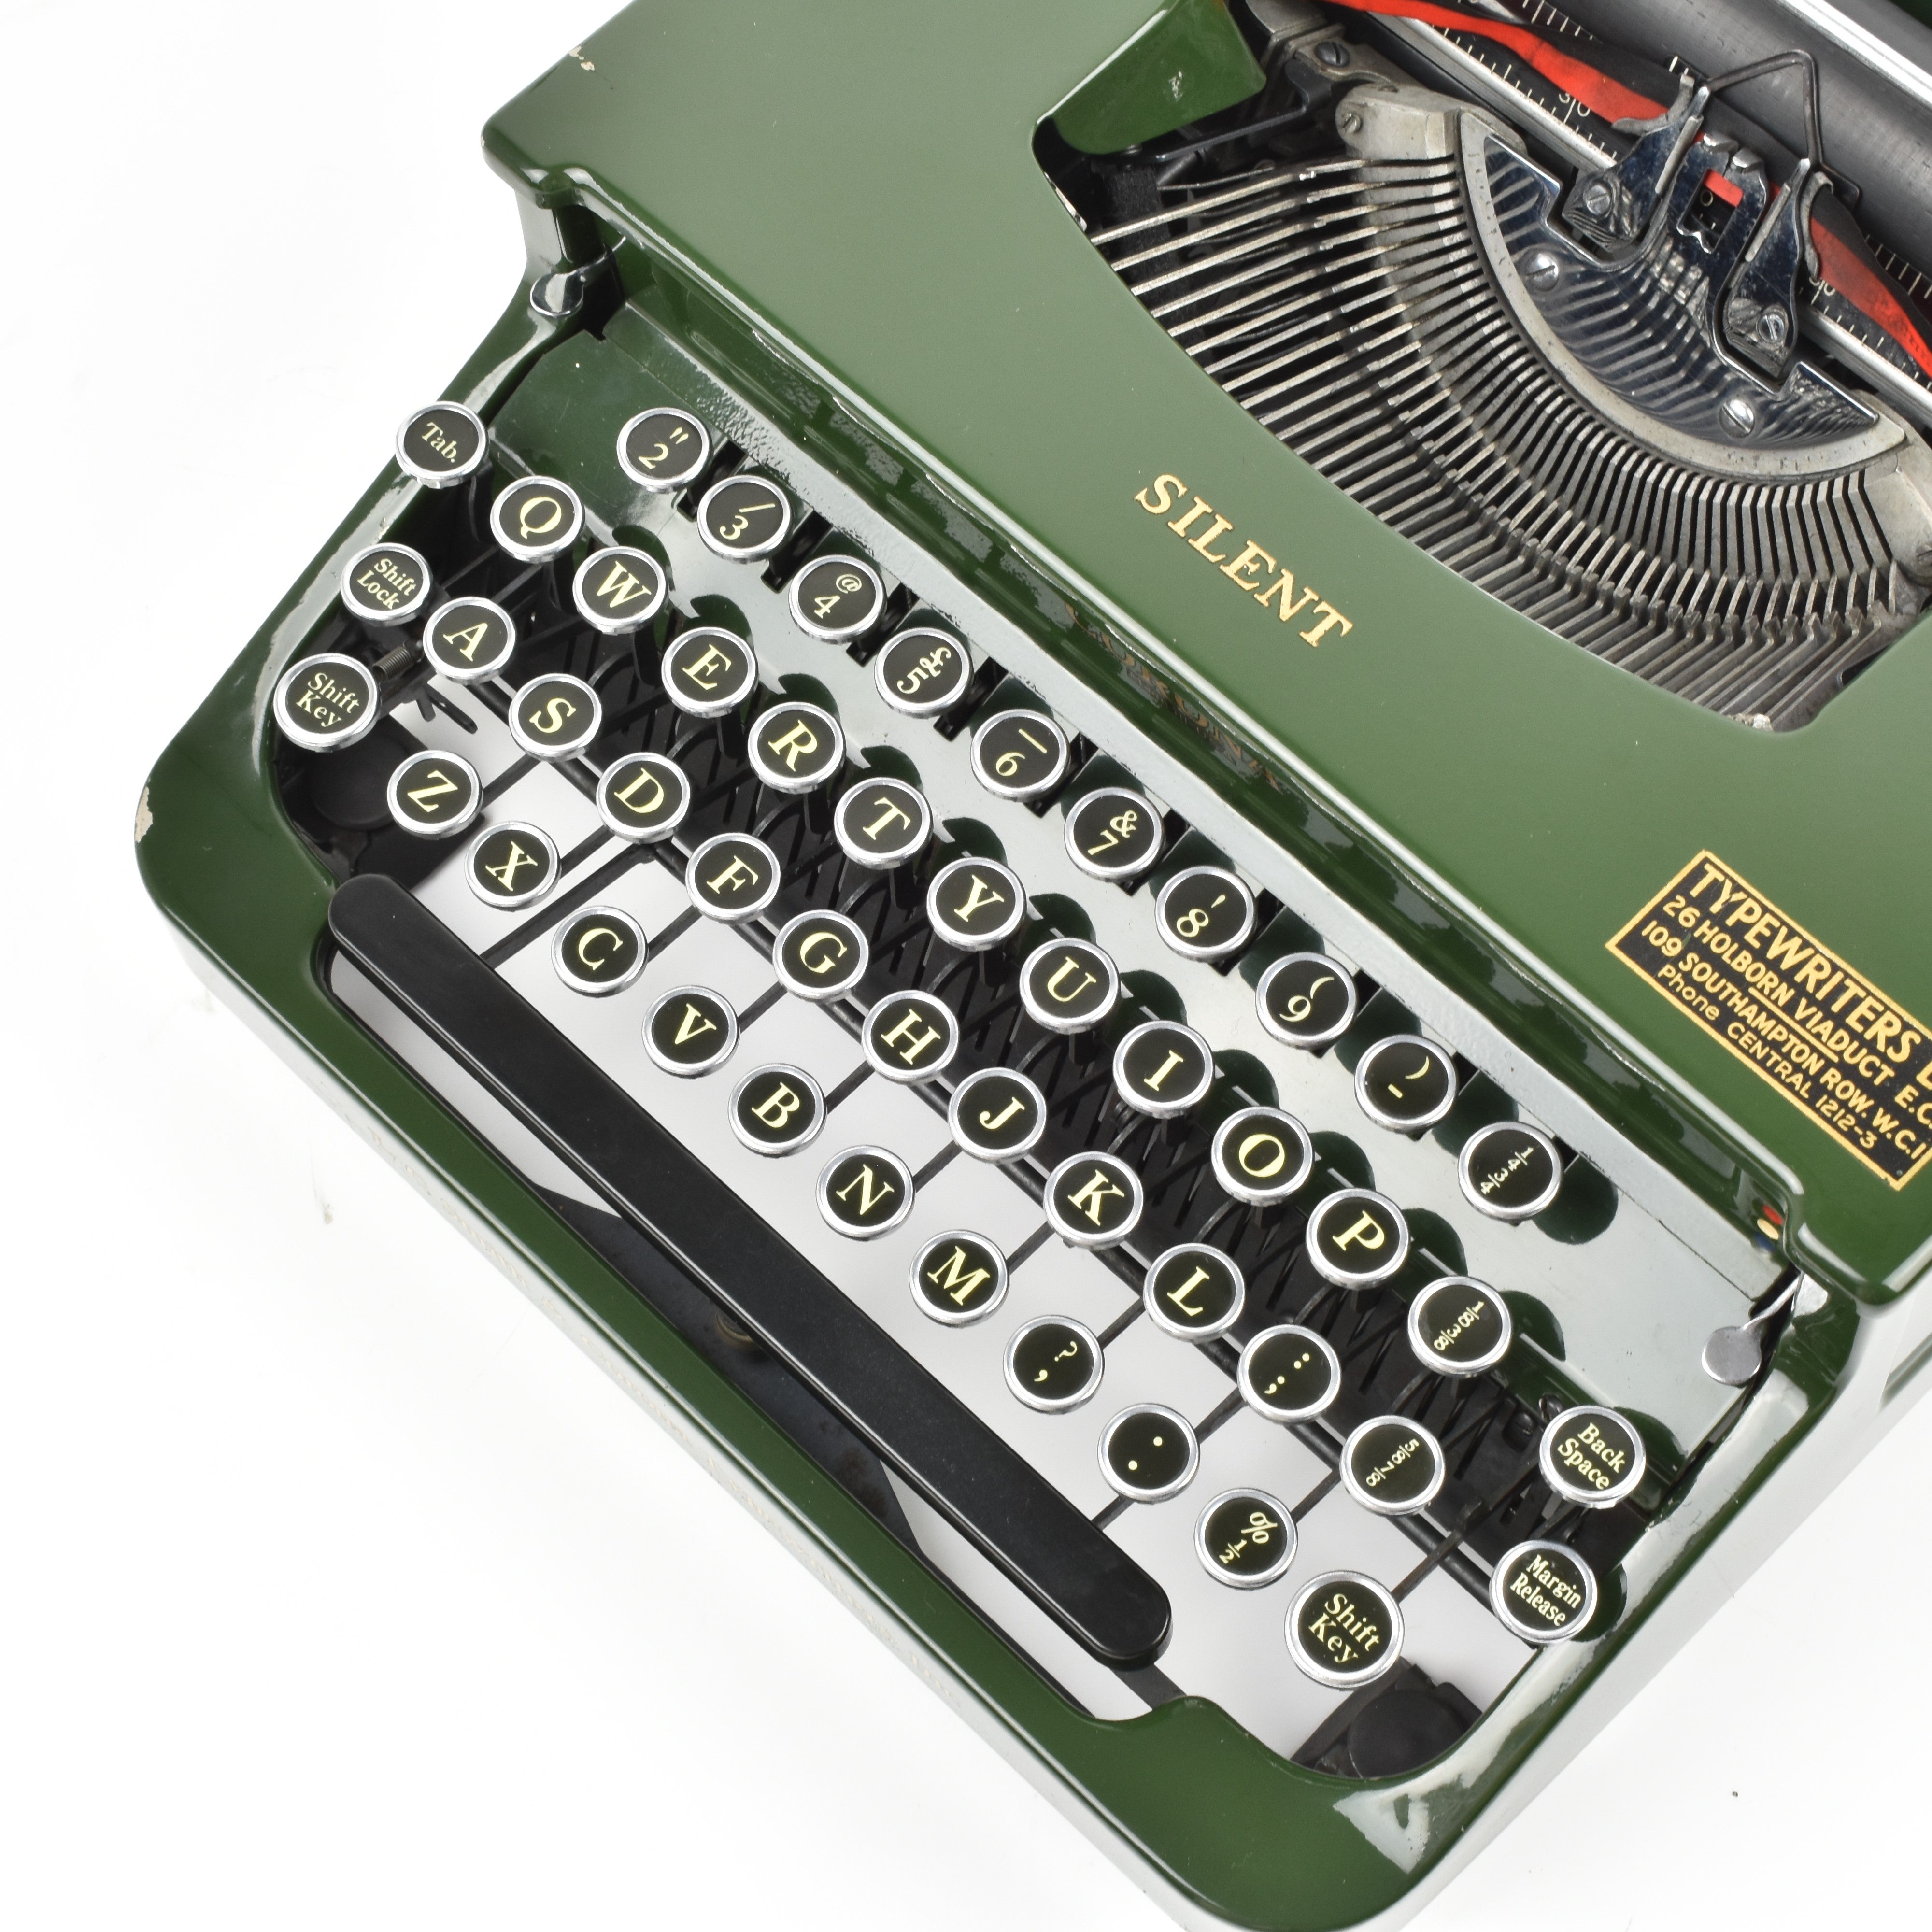 lc smith & corona typewriter